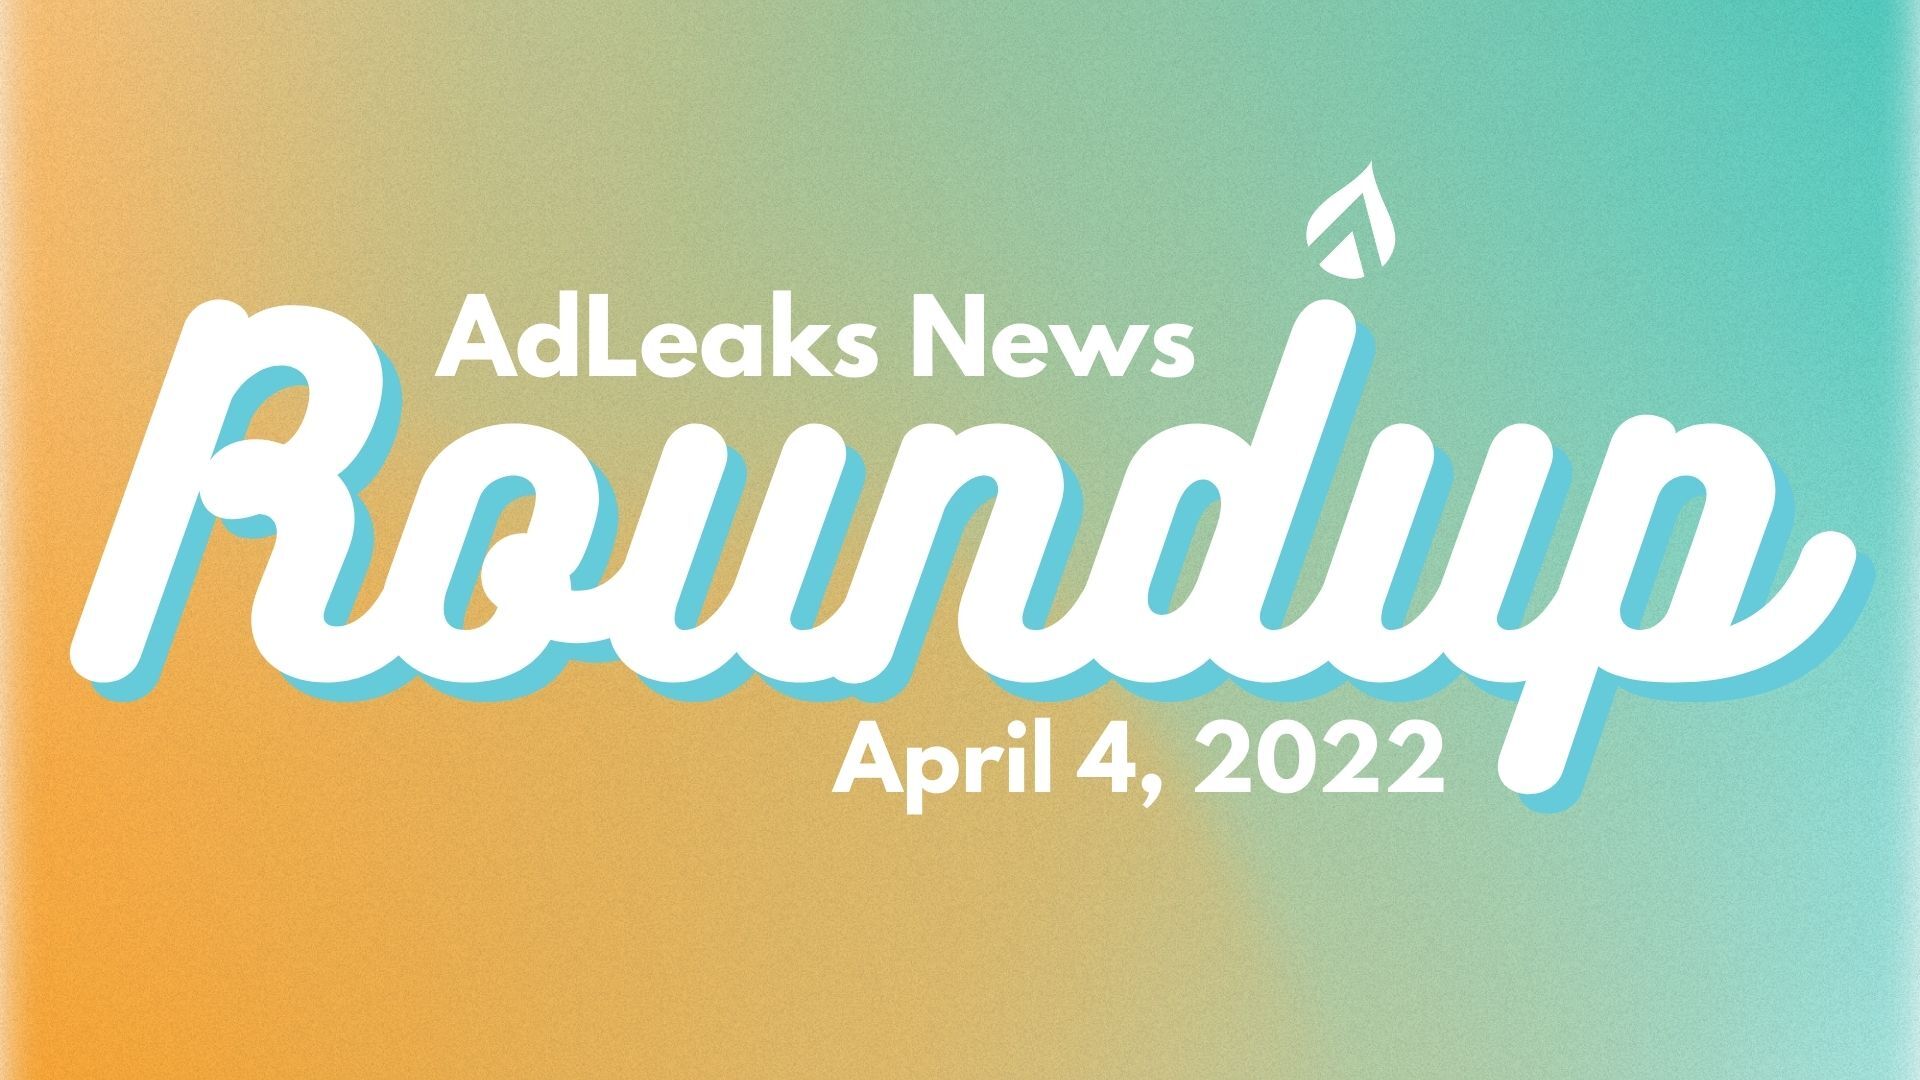 adleaks news roundup april 4, 2022